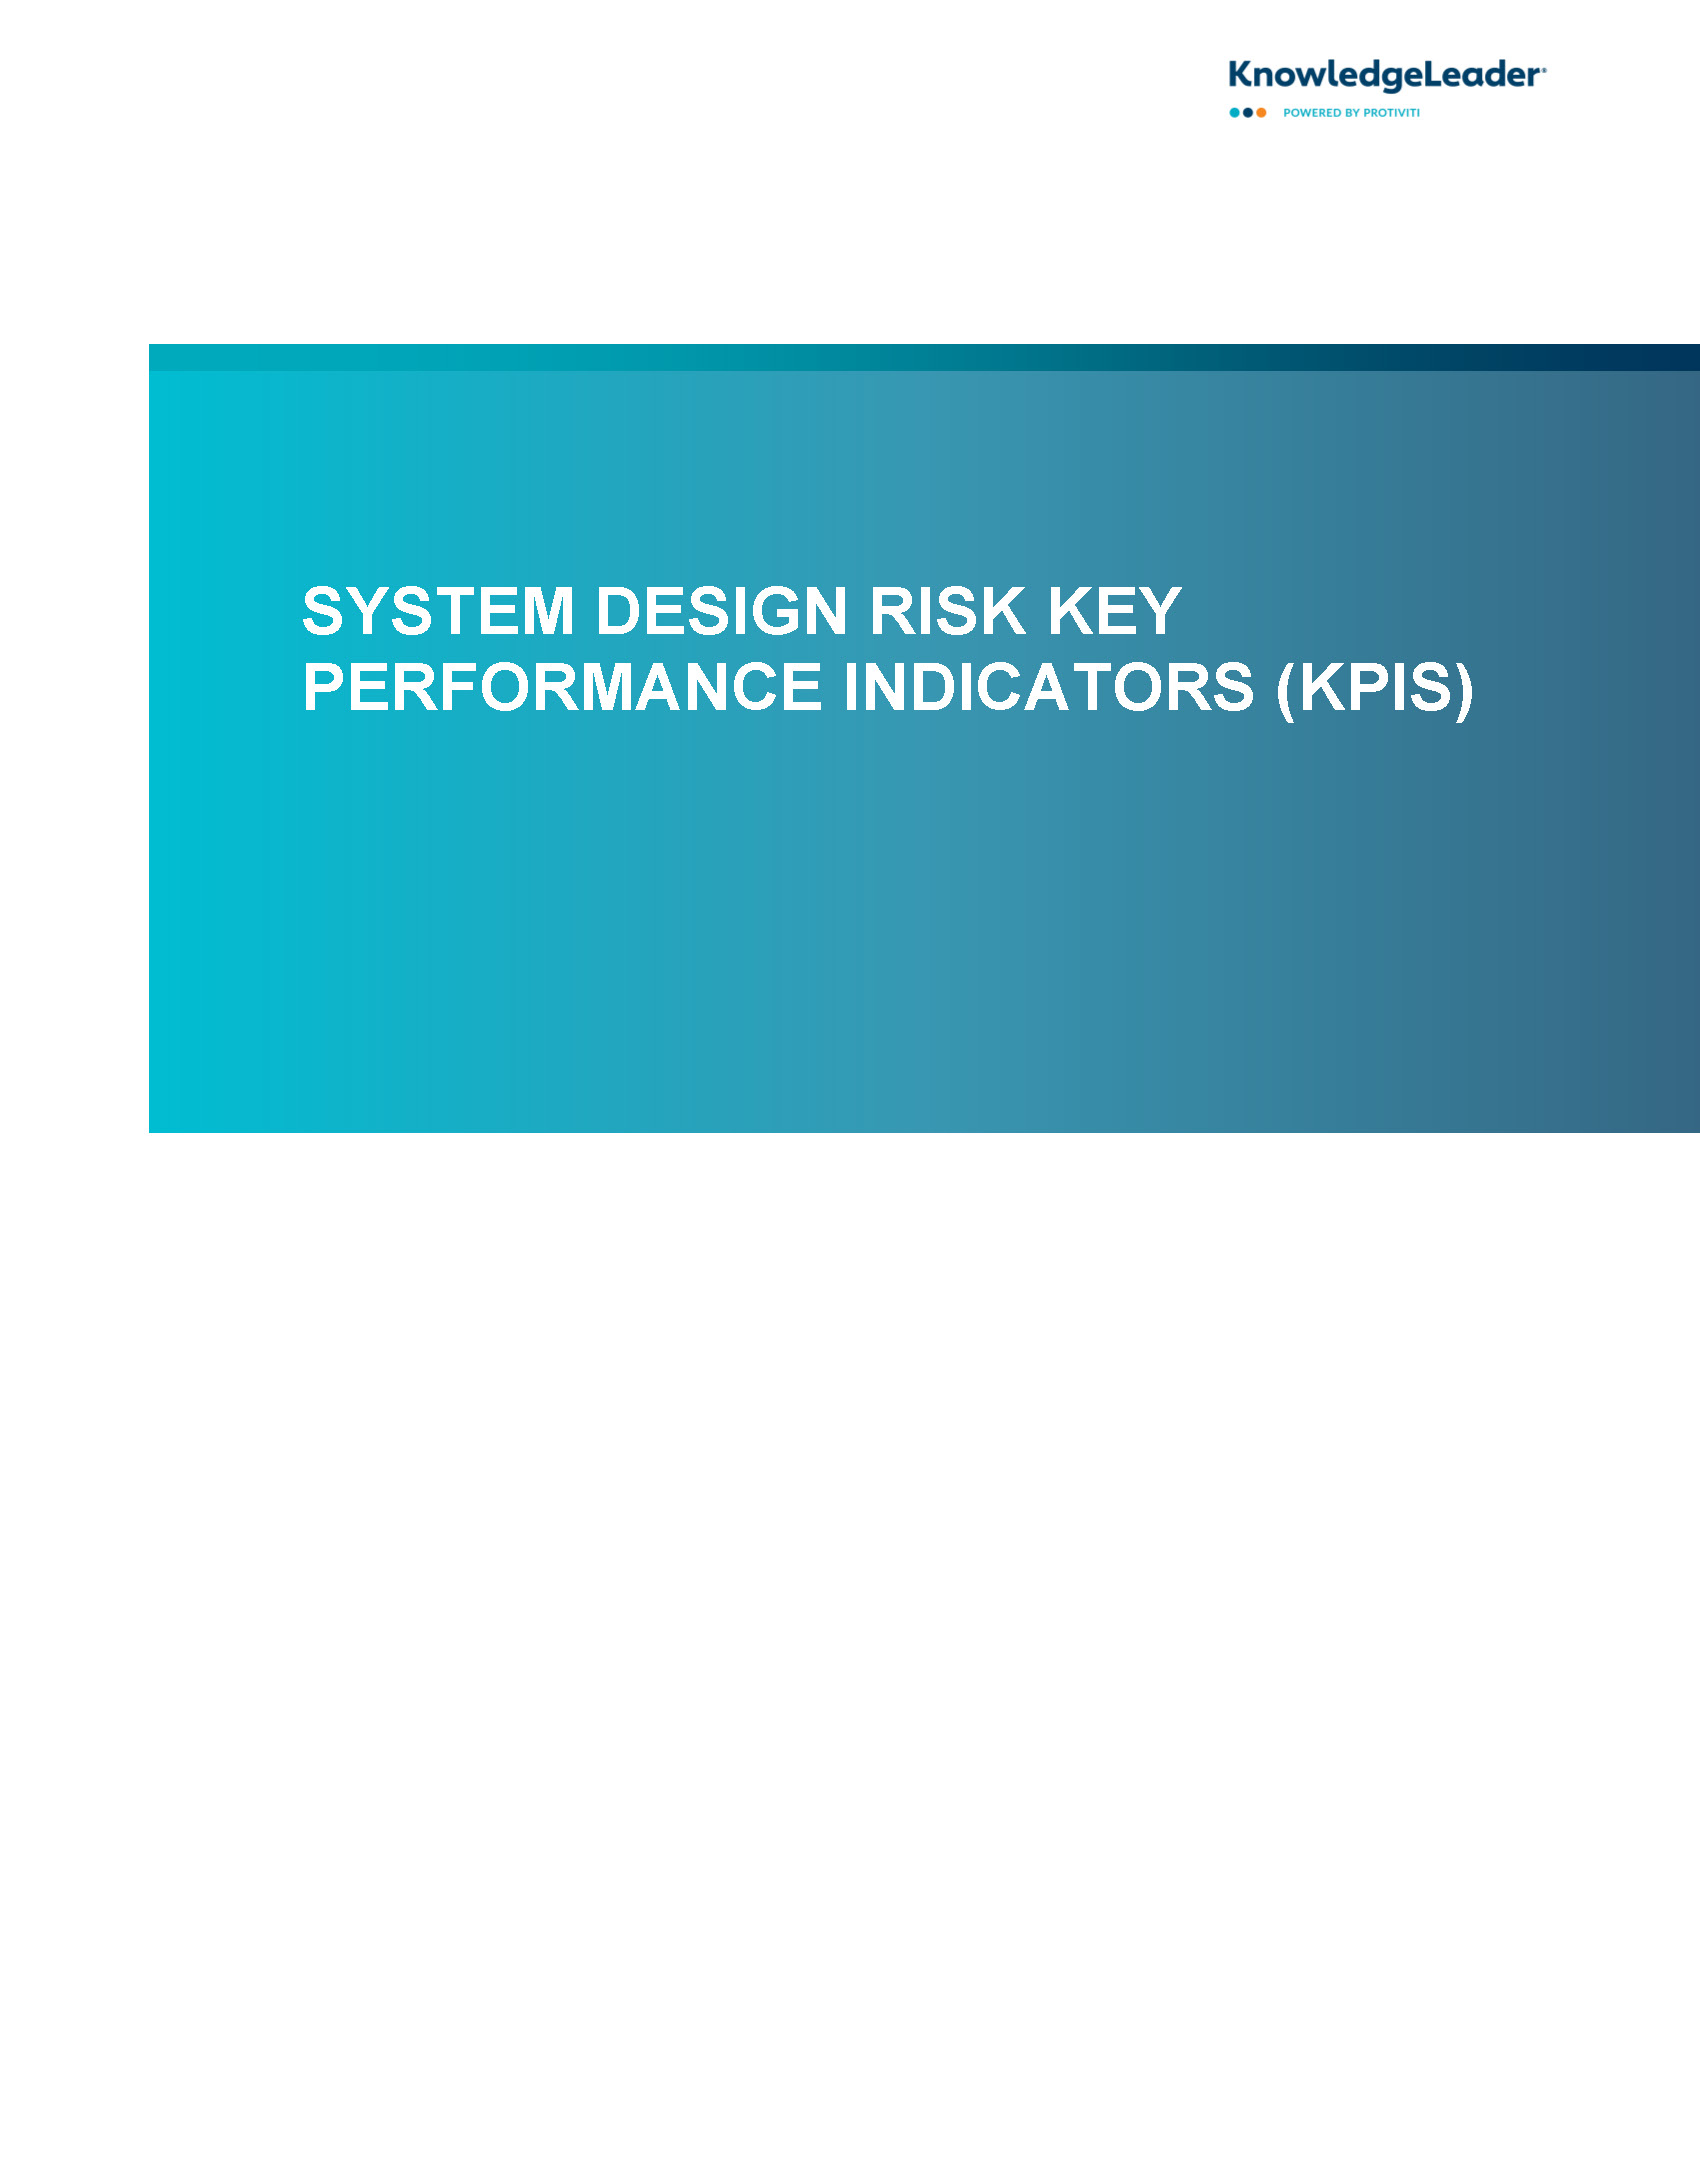 System Design Risk Key Performance Indicators (KPIs)